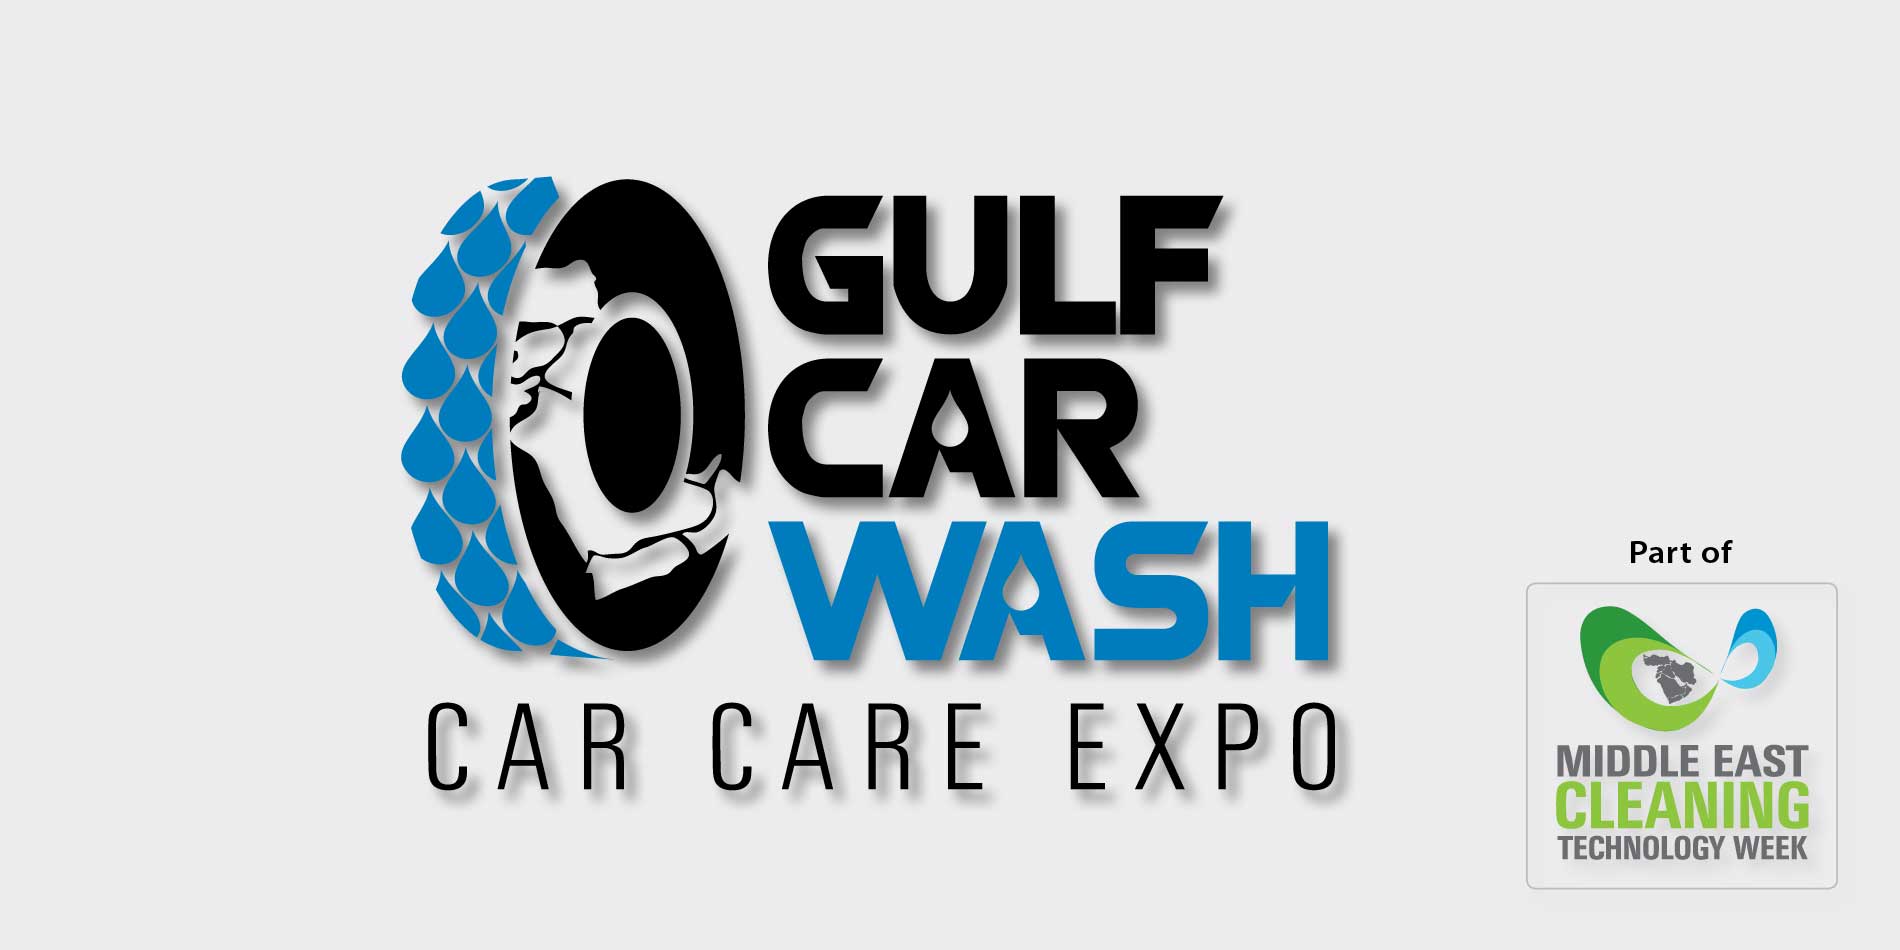 Messebanner der Gulf Car Wash – Car Care Expo